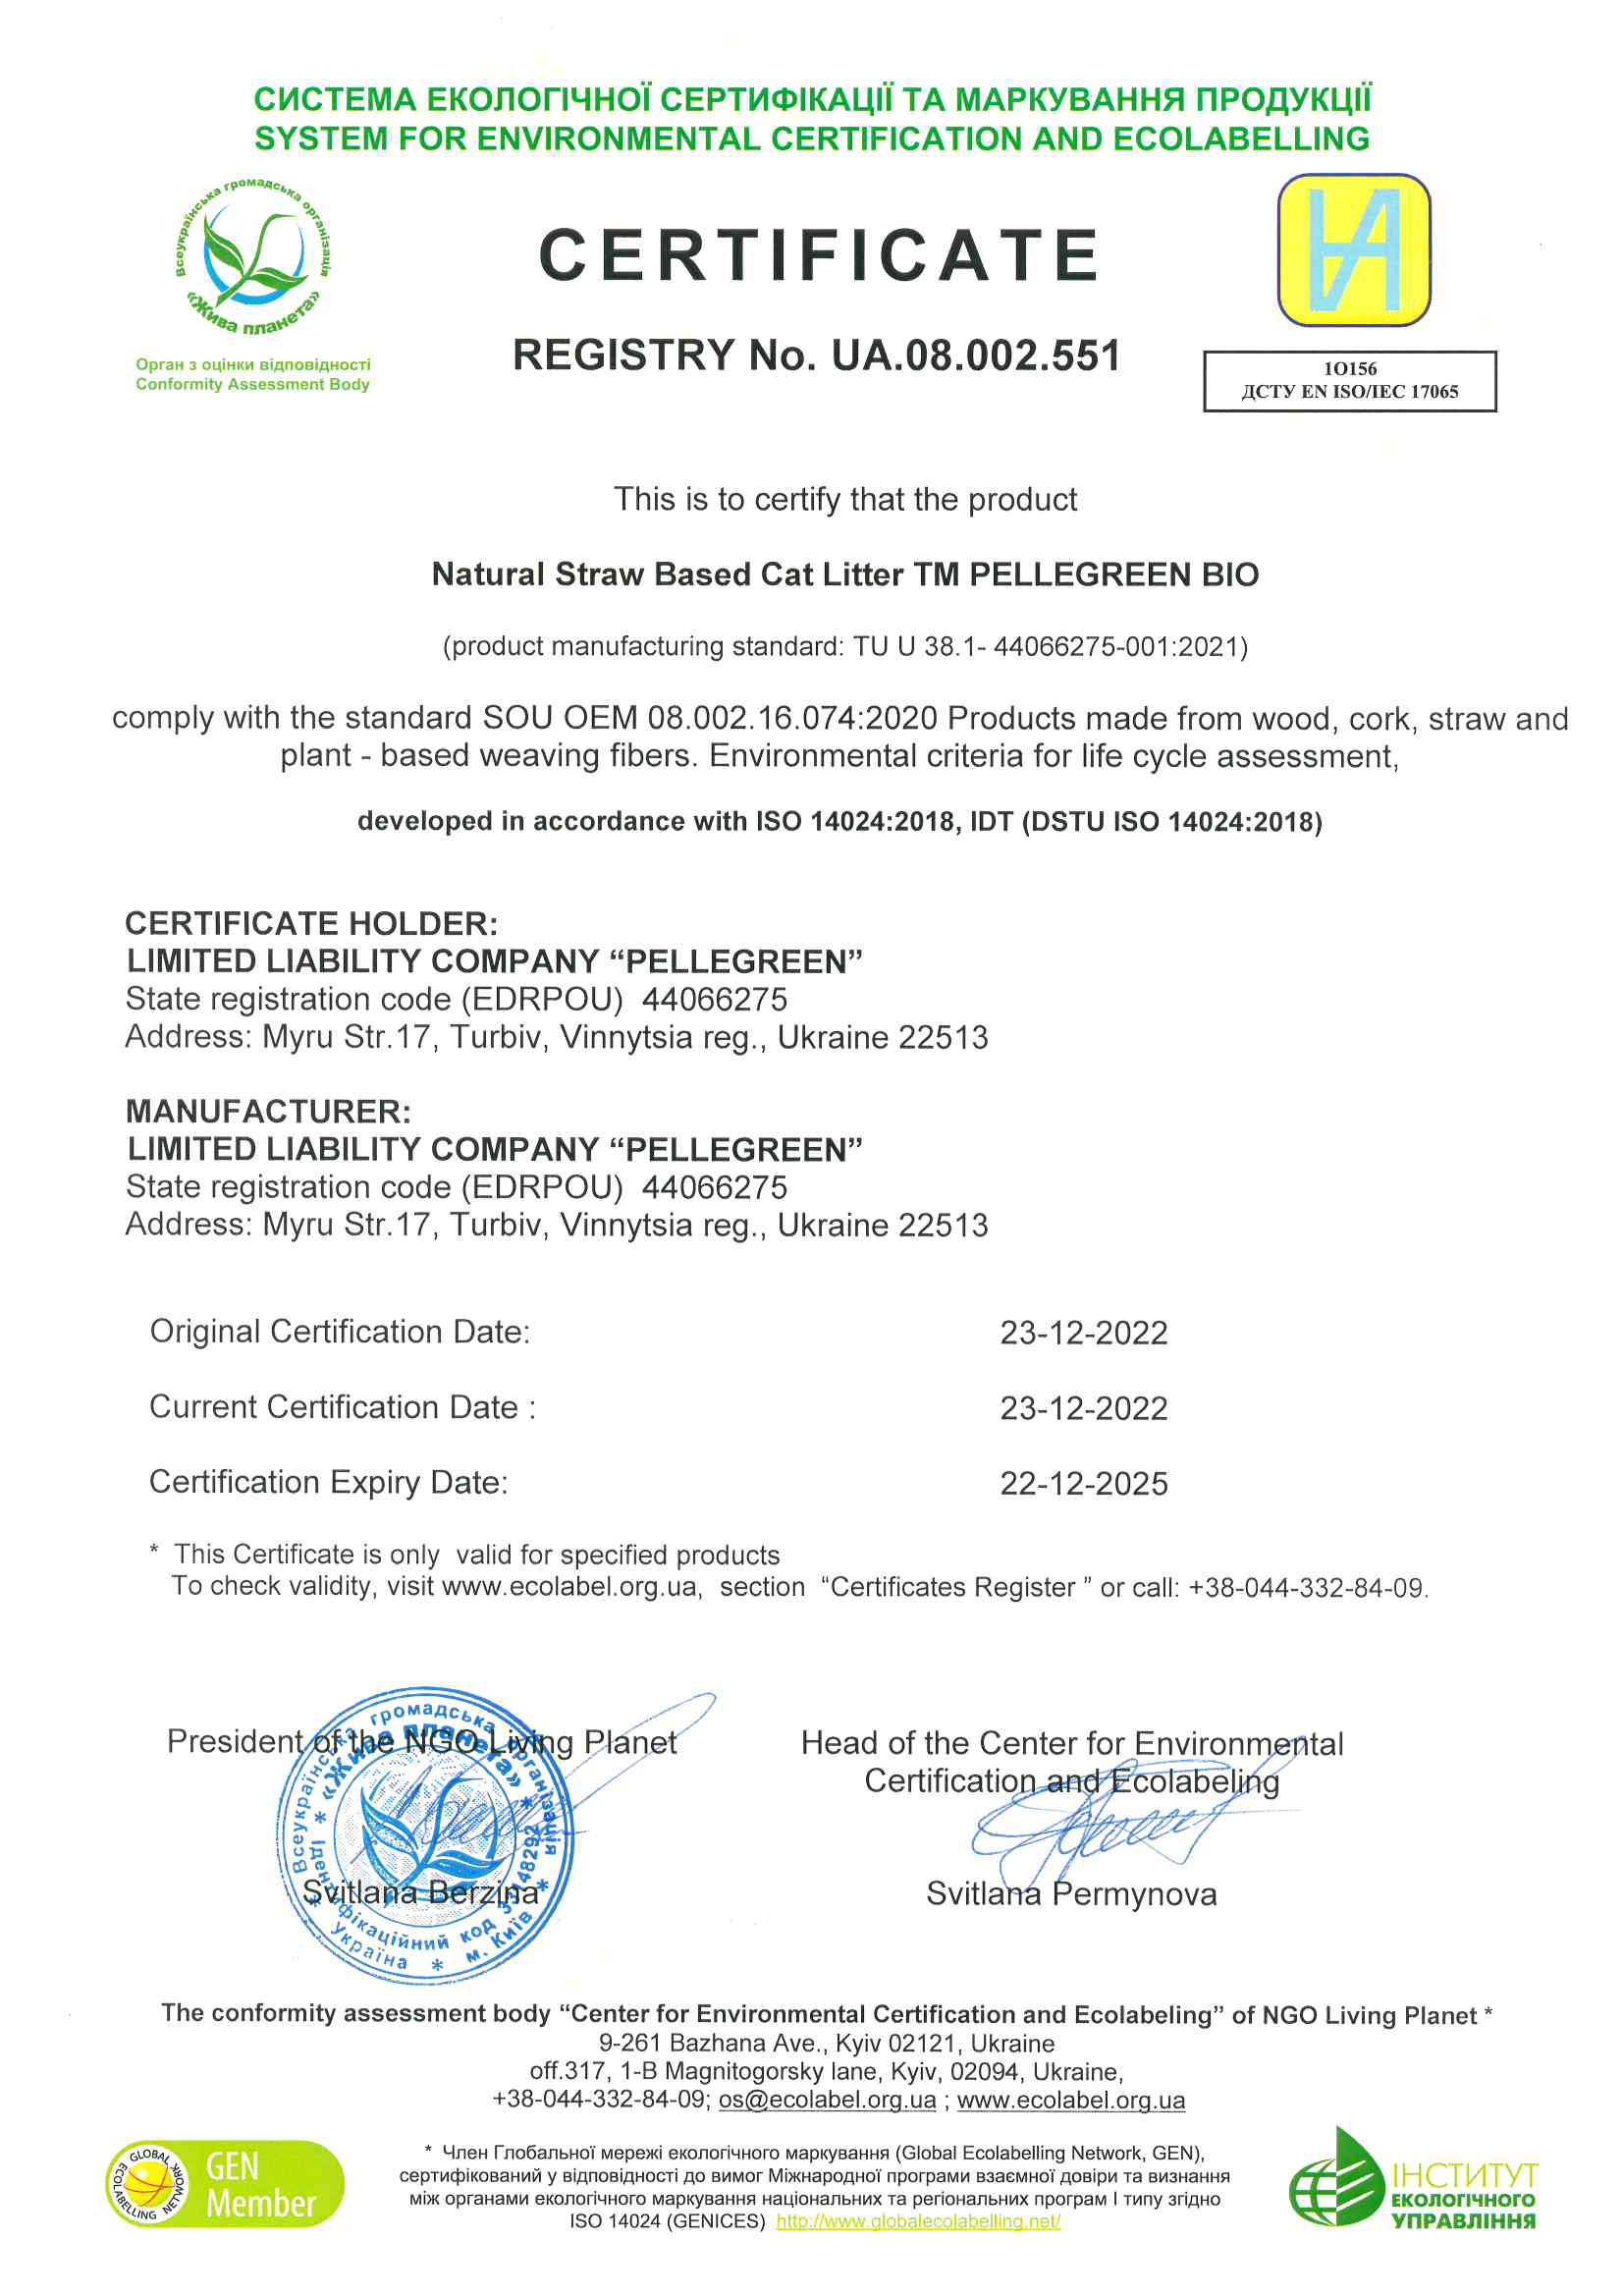 Ecological certificate № UA.08.002.551